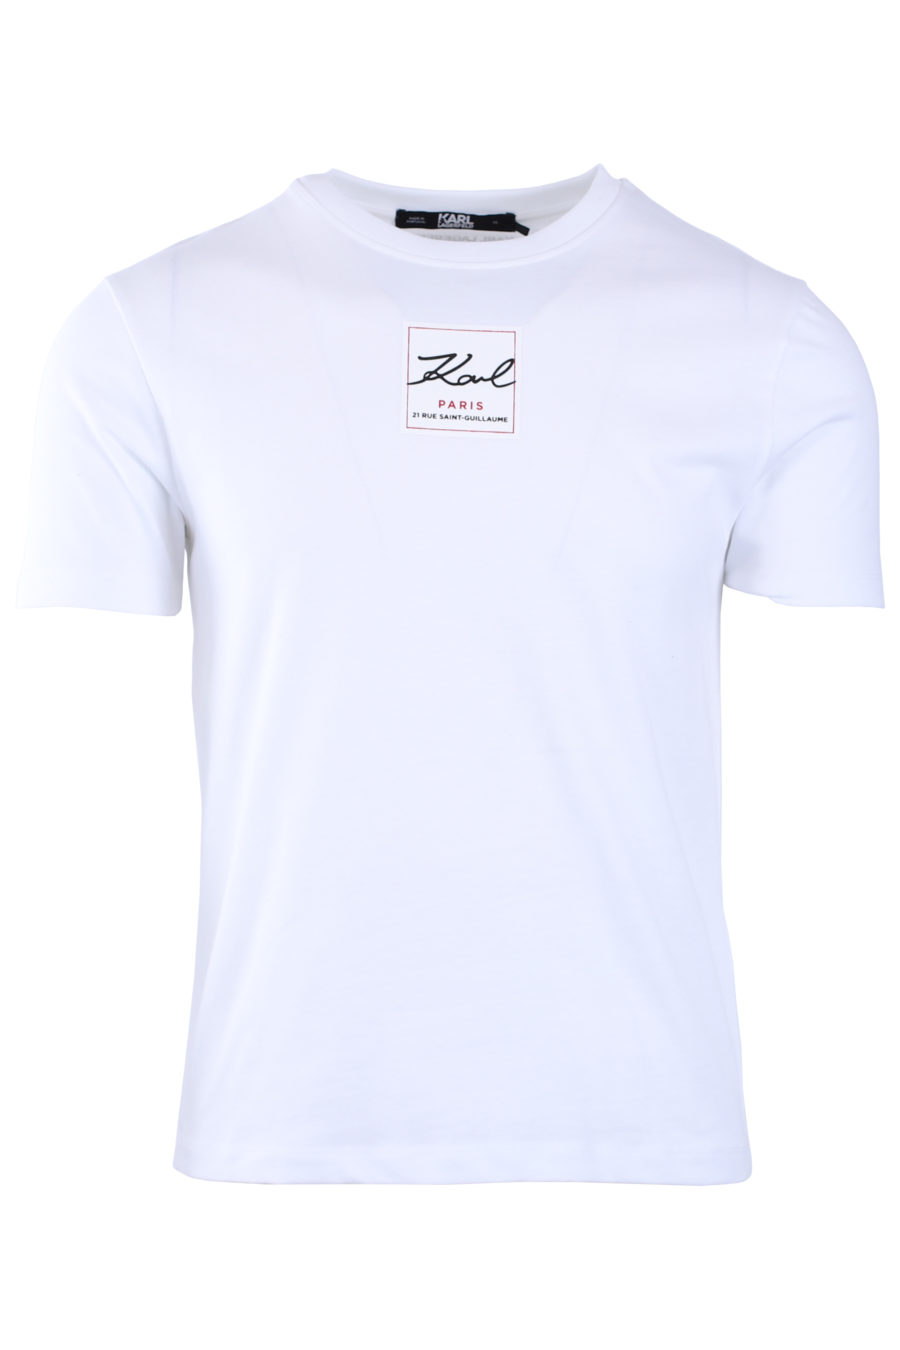 Camiseta unisex blanca con logo - IMG 9029